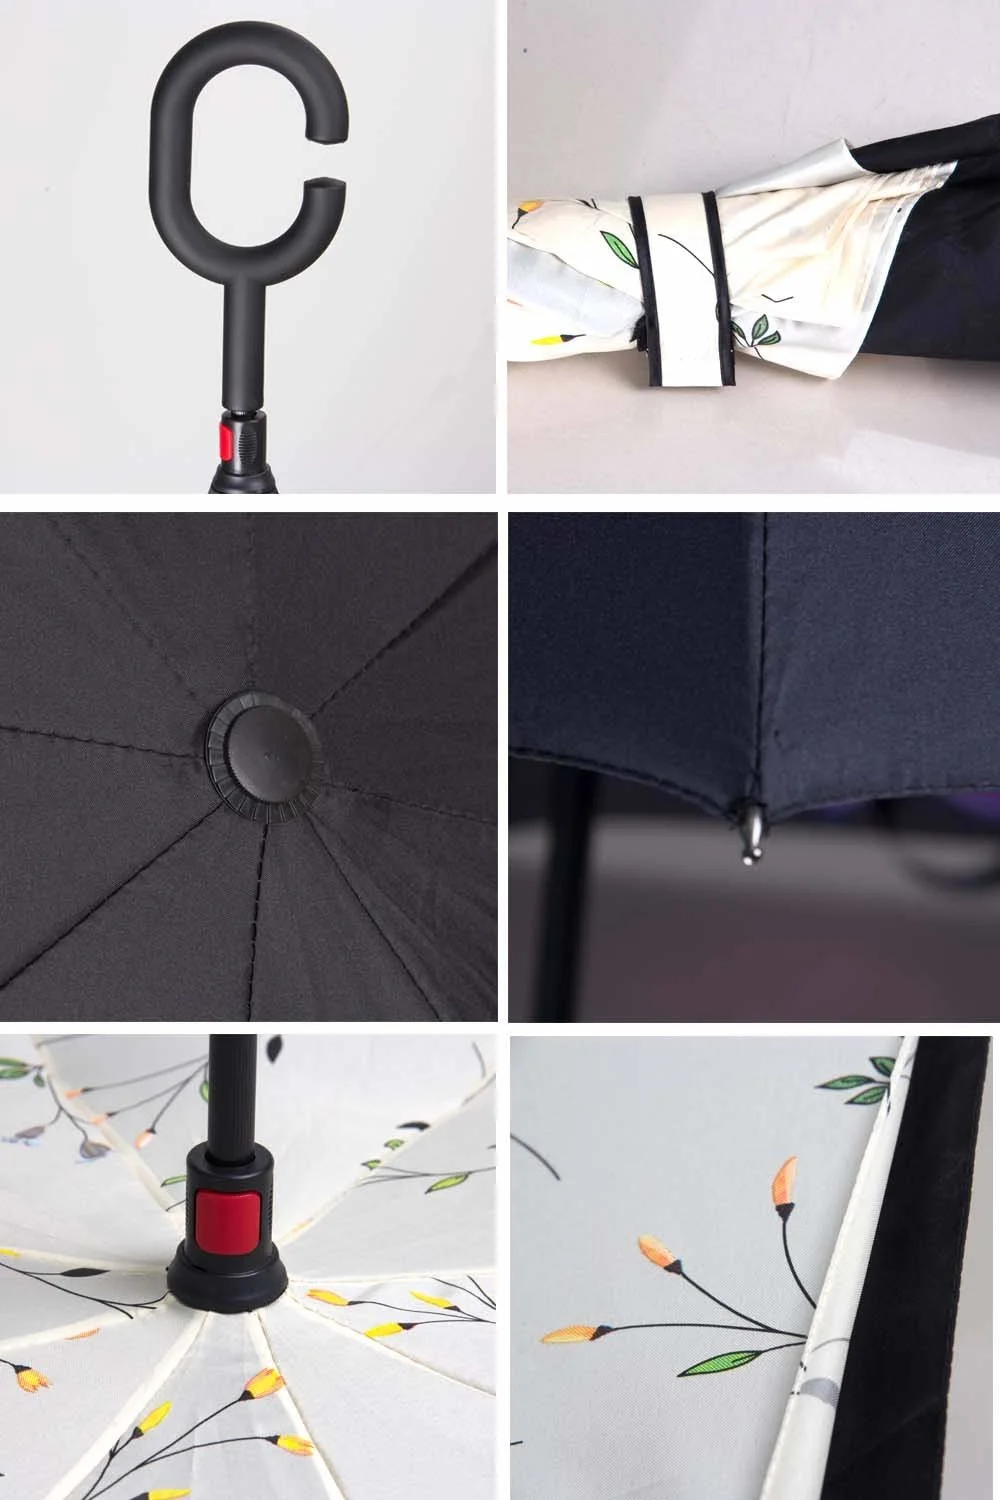 C Handle Vehicle UV Protection Car Rain Inverted Umbrella